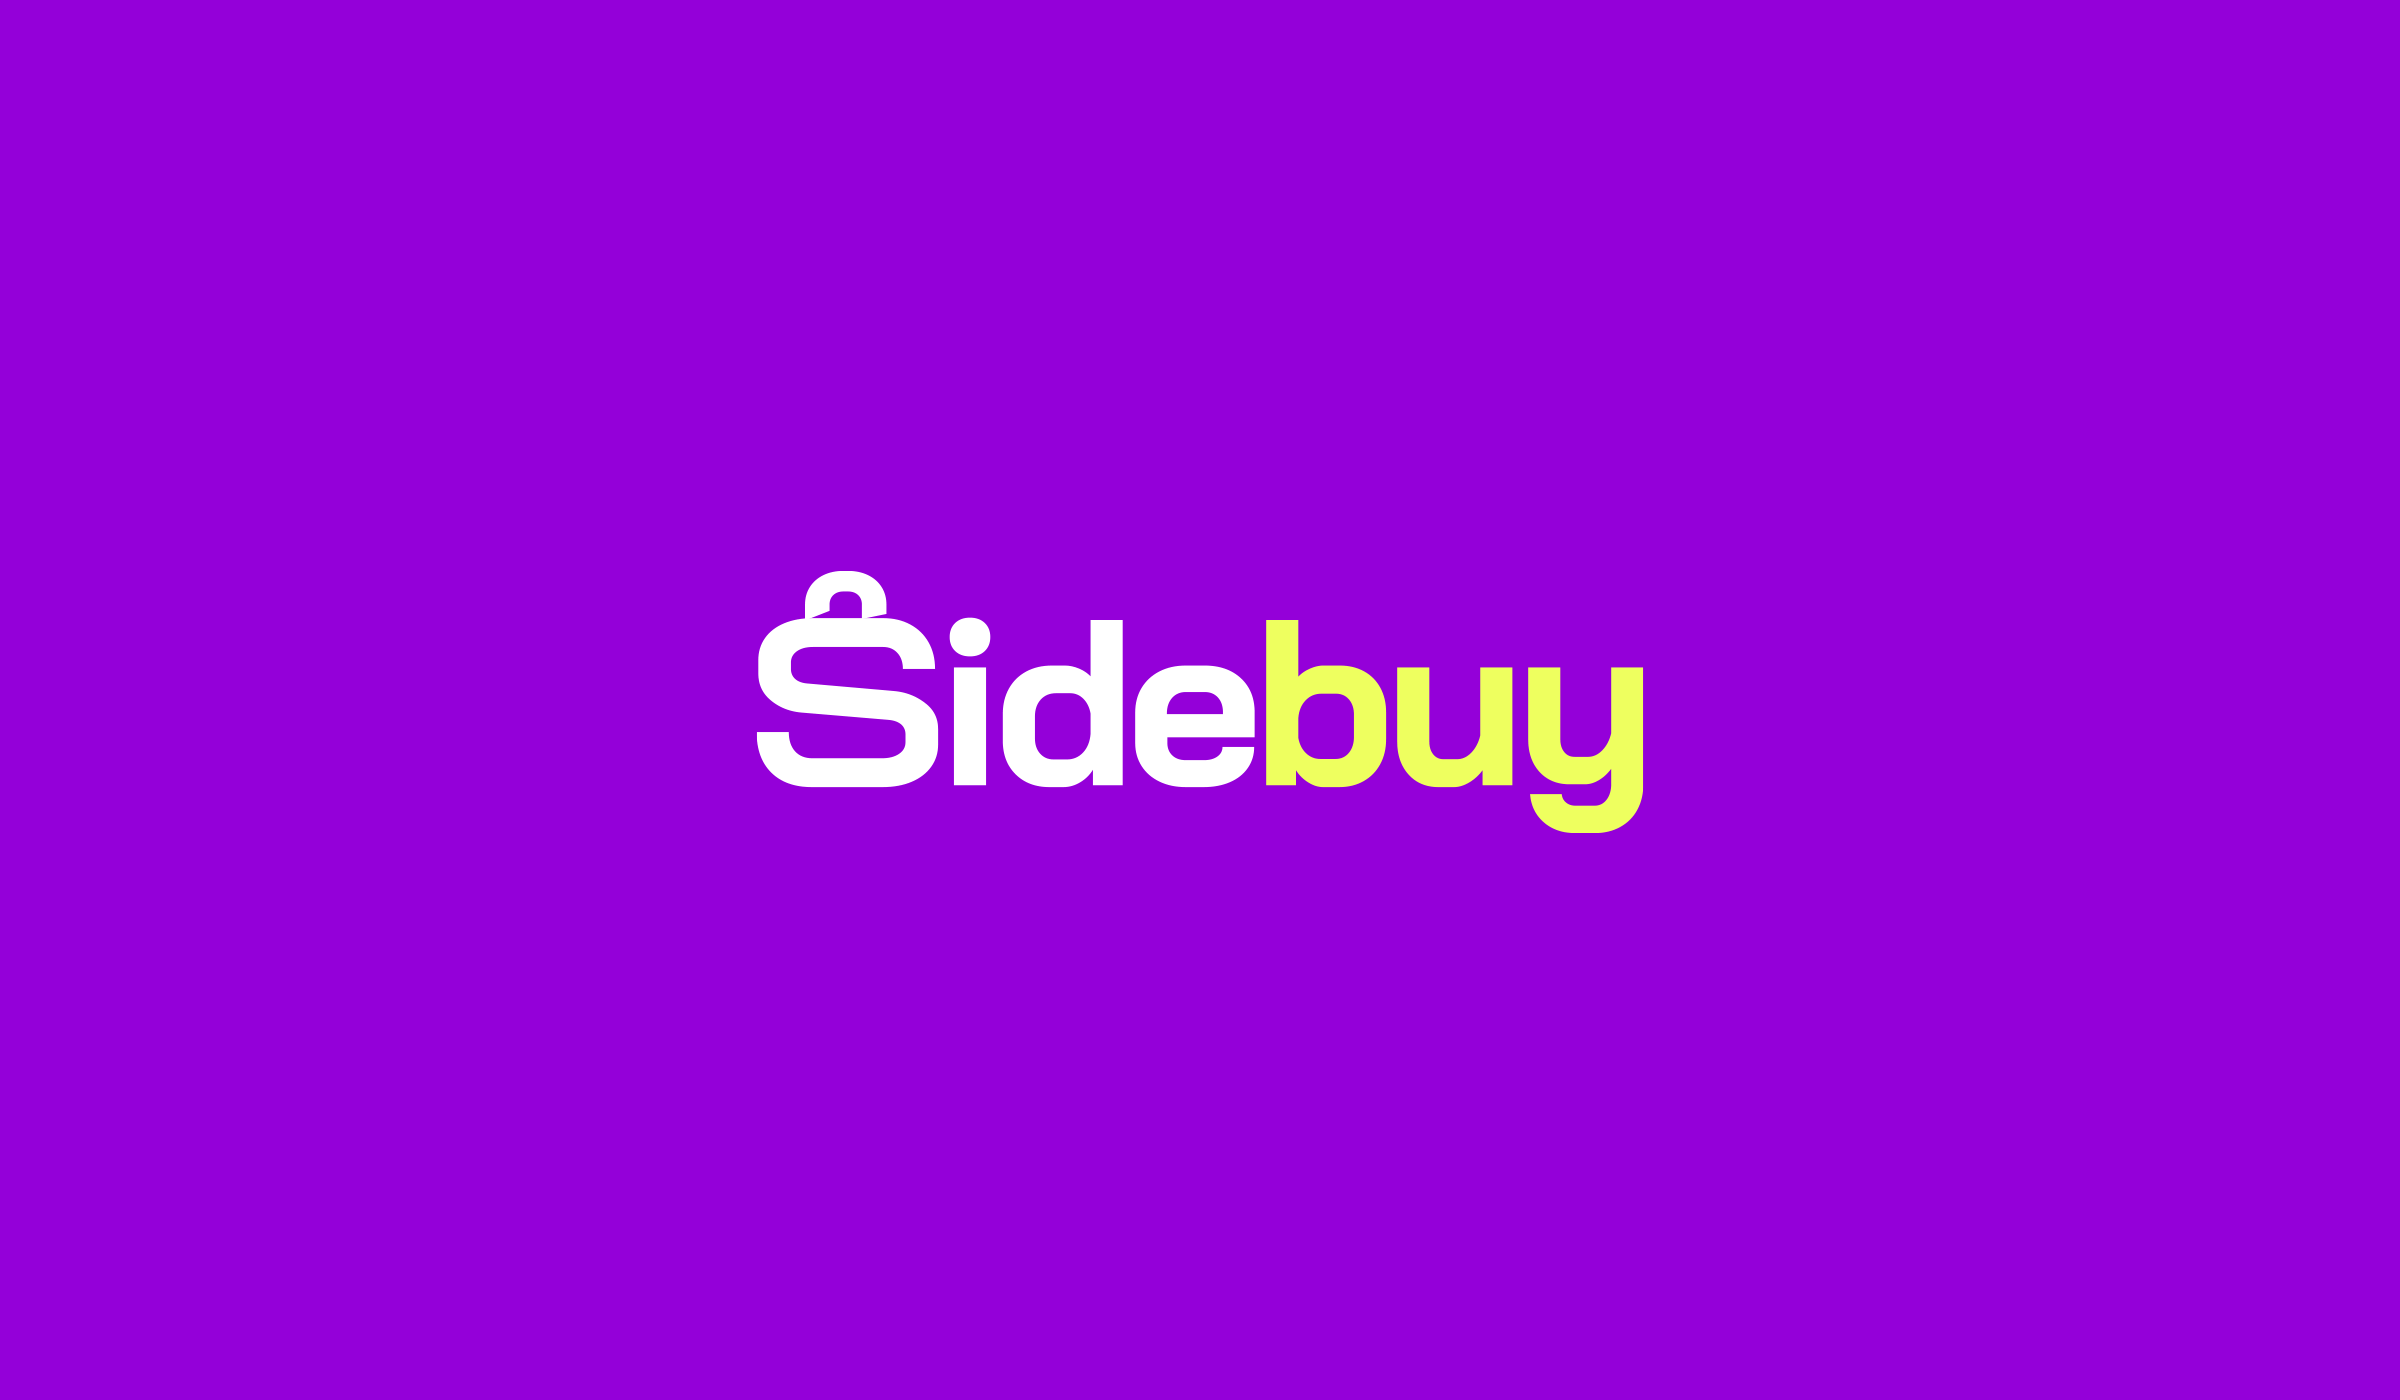 sidebuy.com